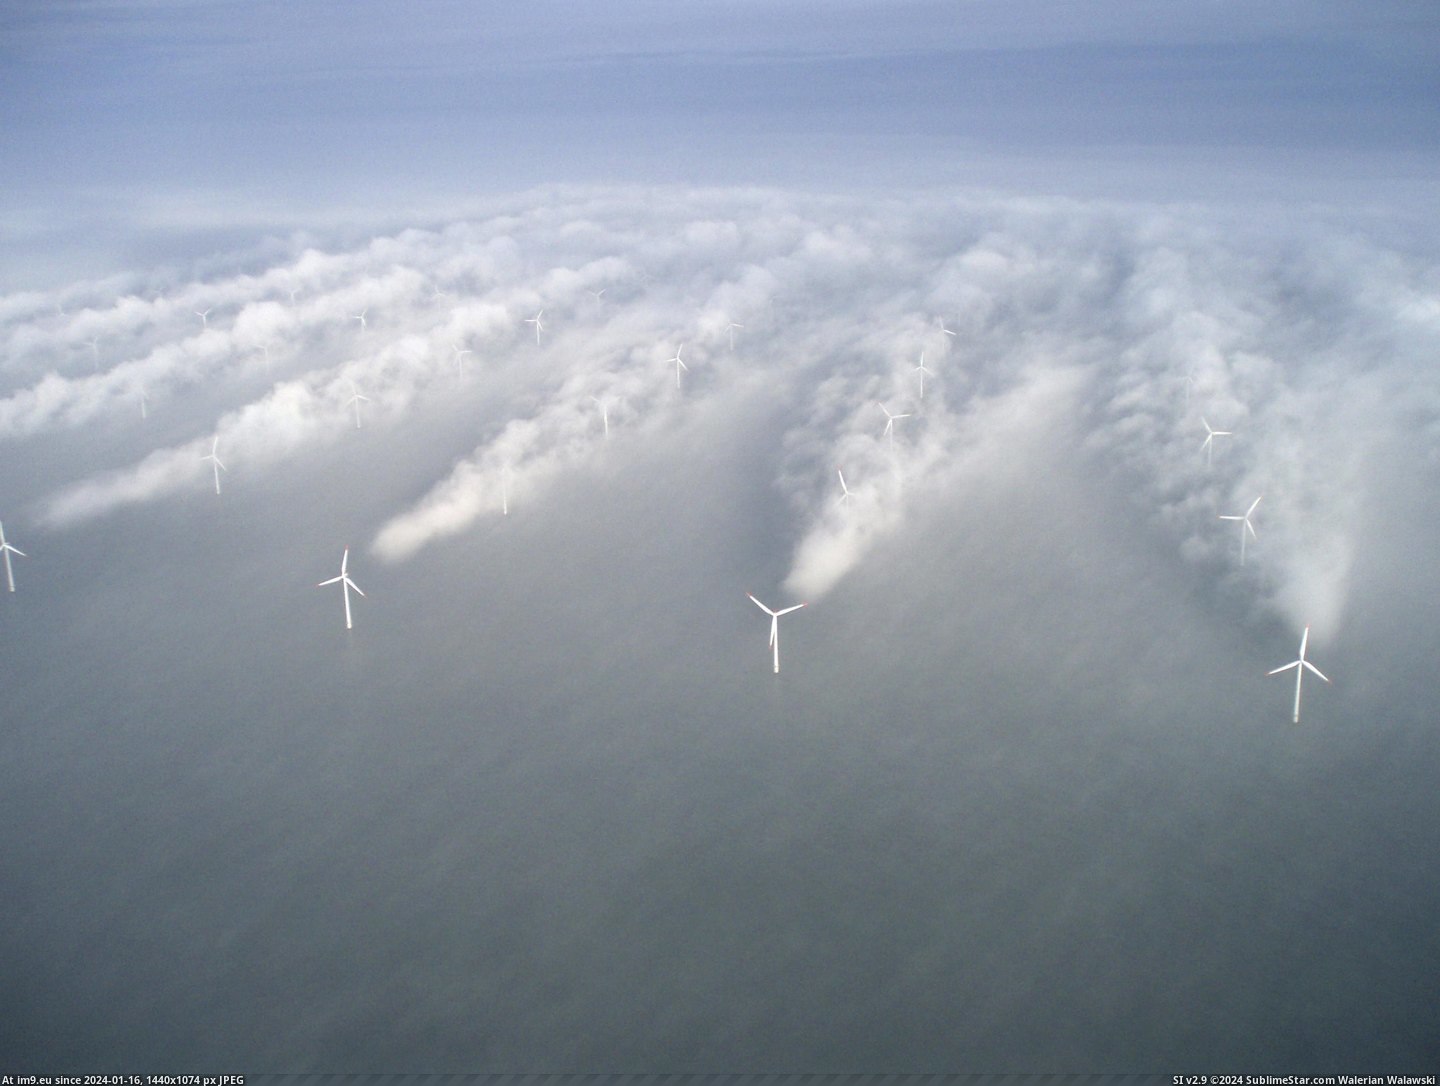 #Farm #Fog #Creating #Wind #Denmark [Pics] Wind farm in Denmark creating fog. Pic. (Bild von album My r/PICS favs))